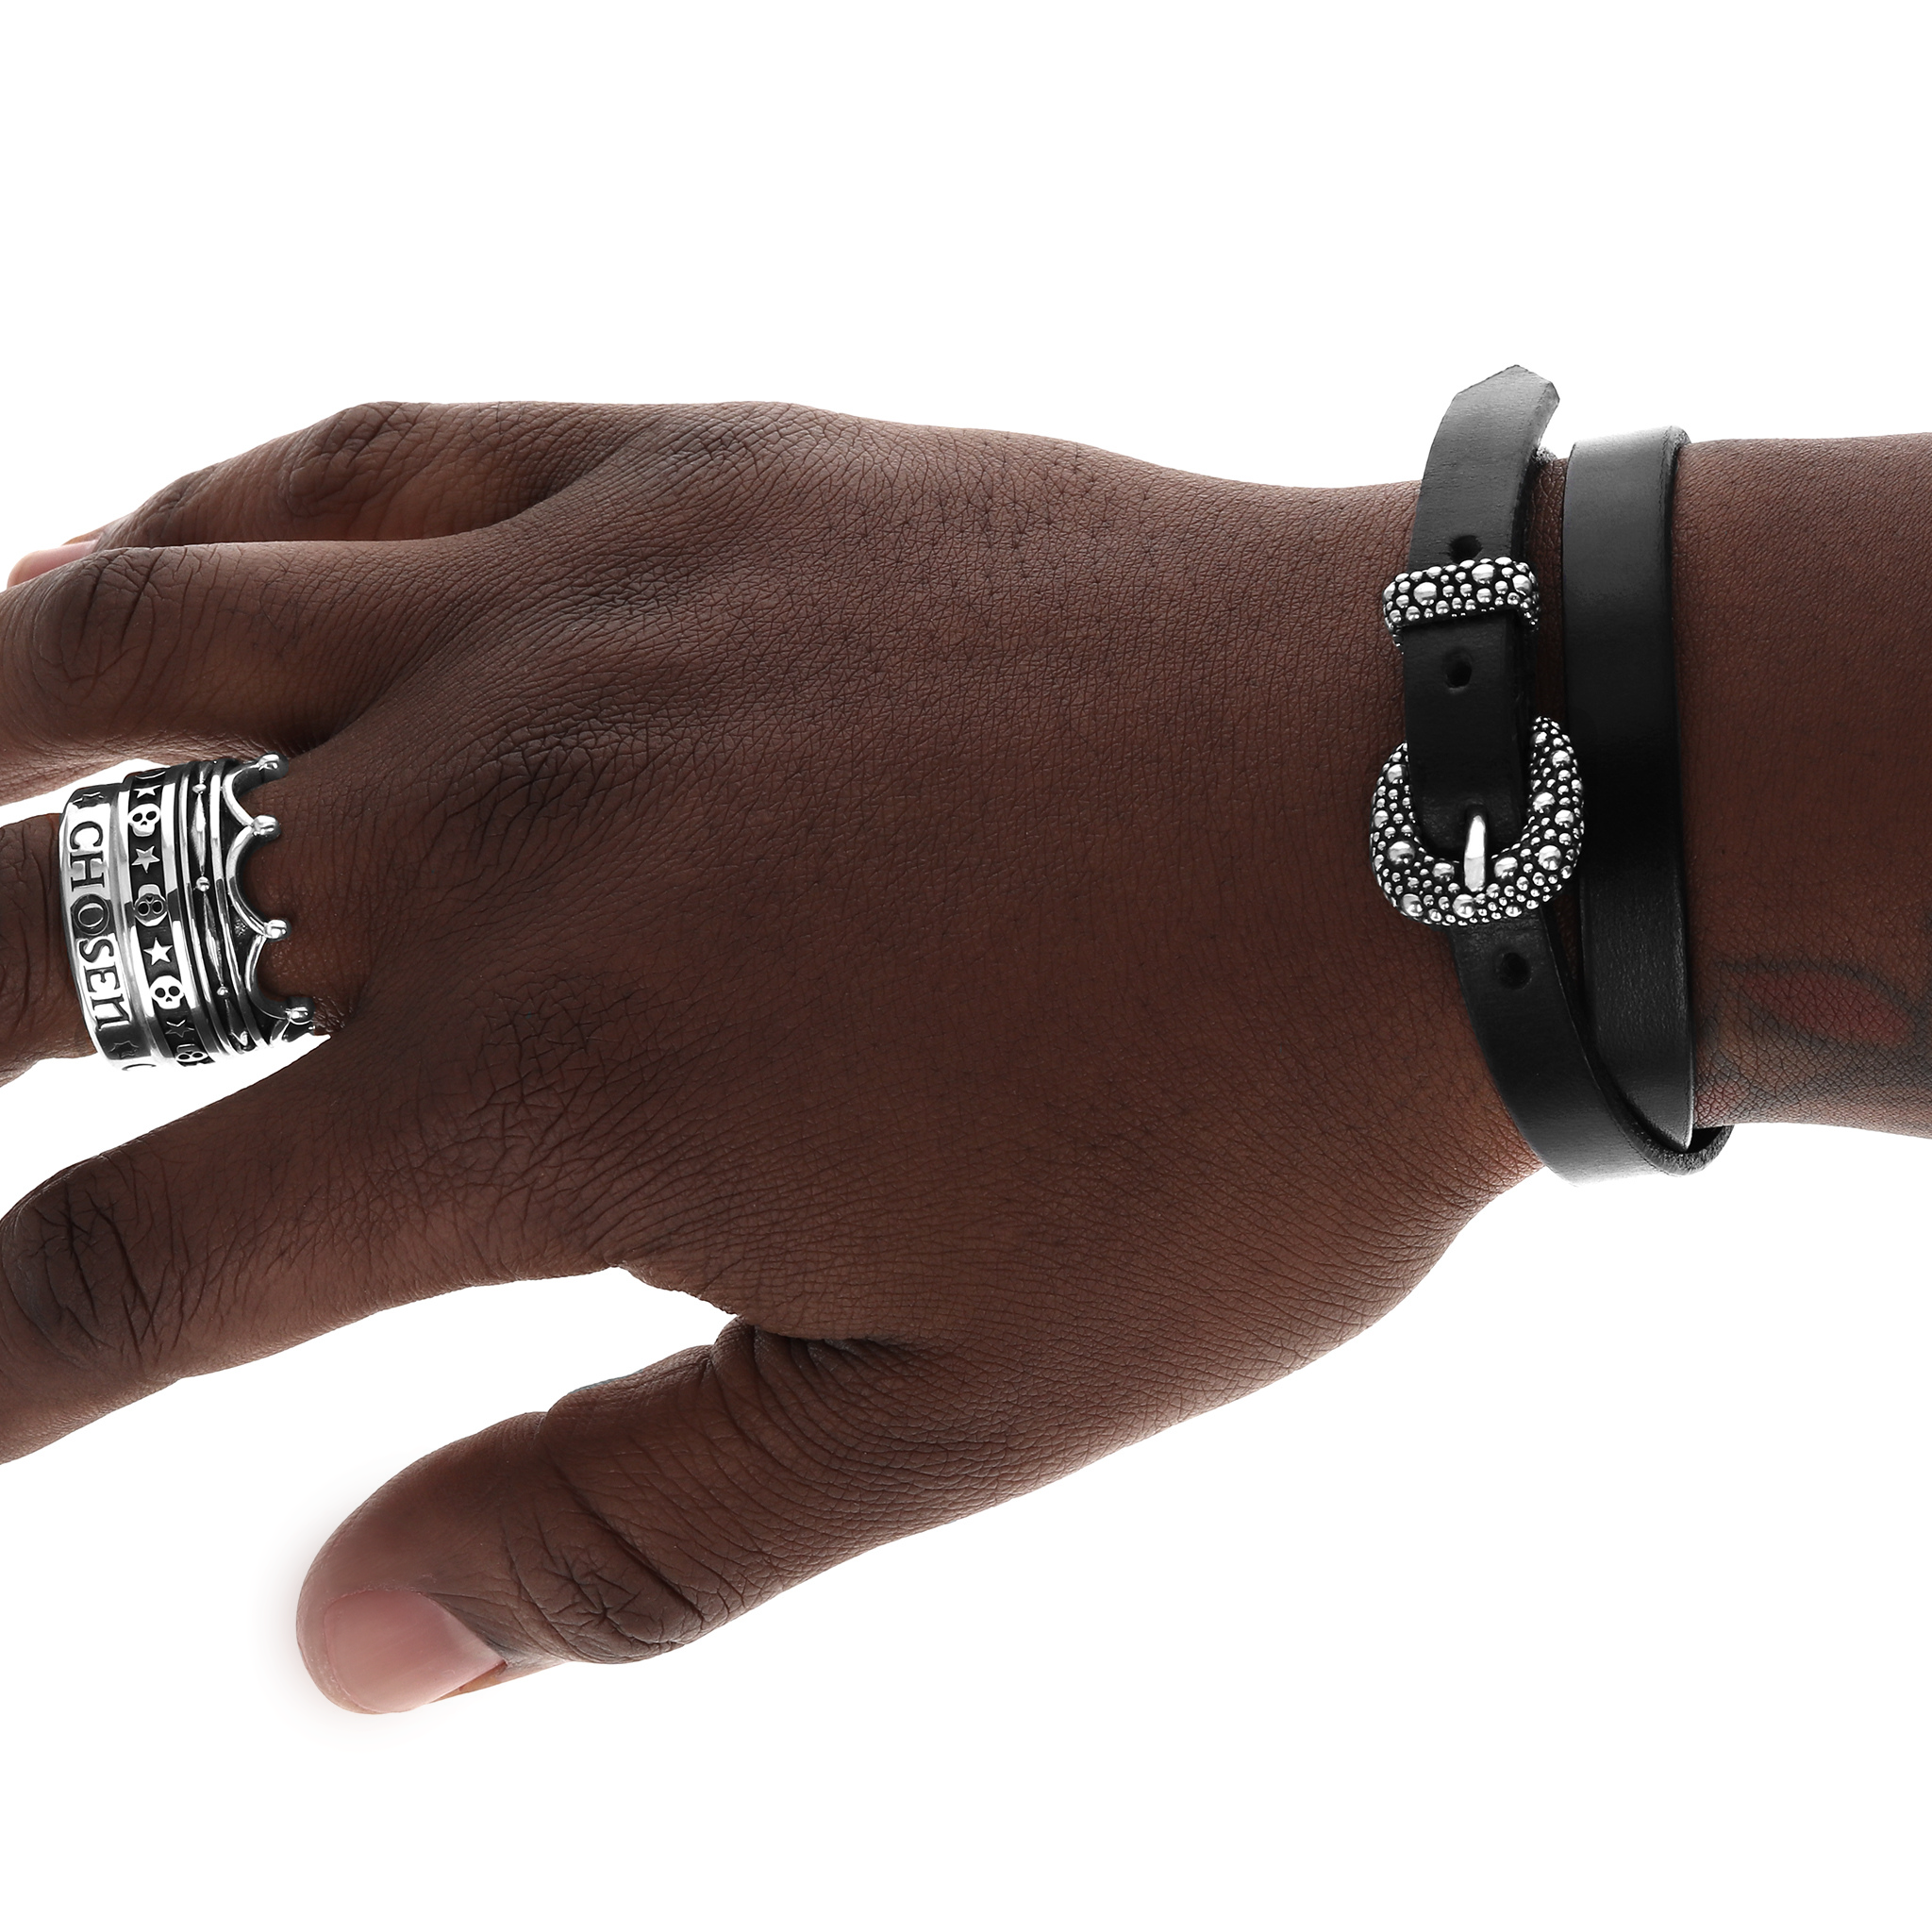 Black Double Wrap Leather Bracelet with Stingray Buckle on model's wrist